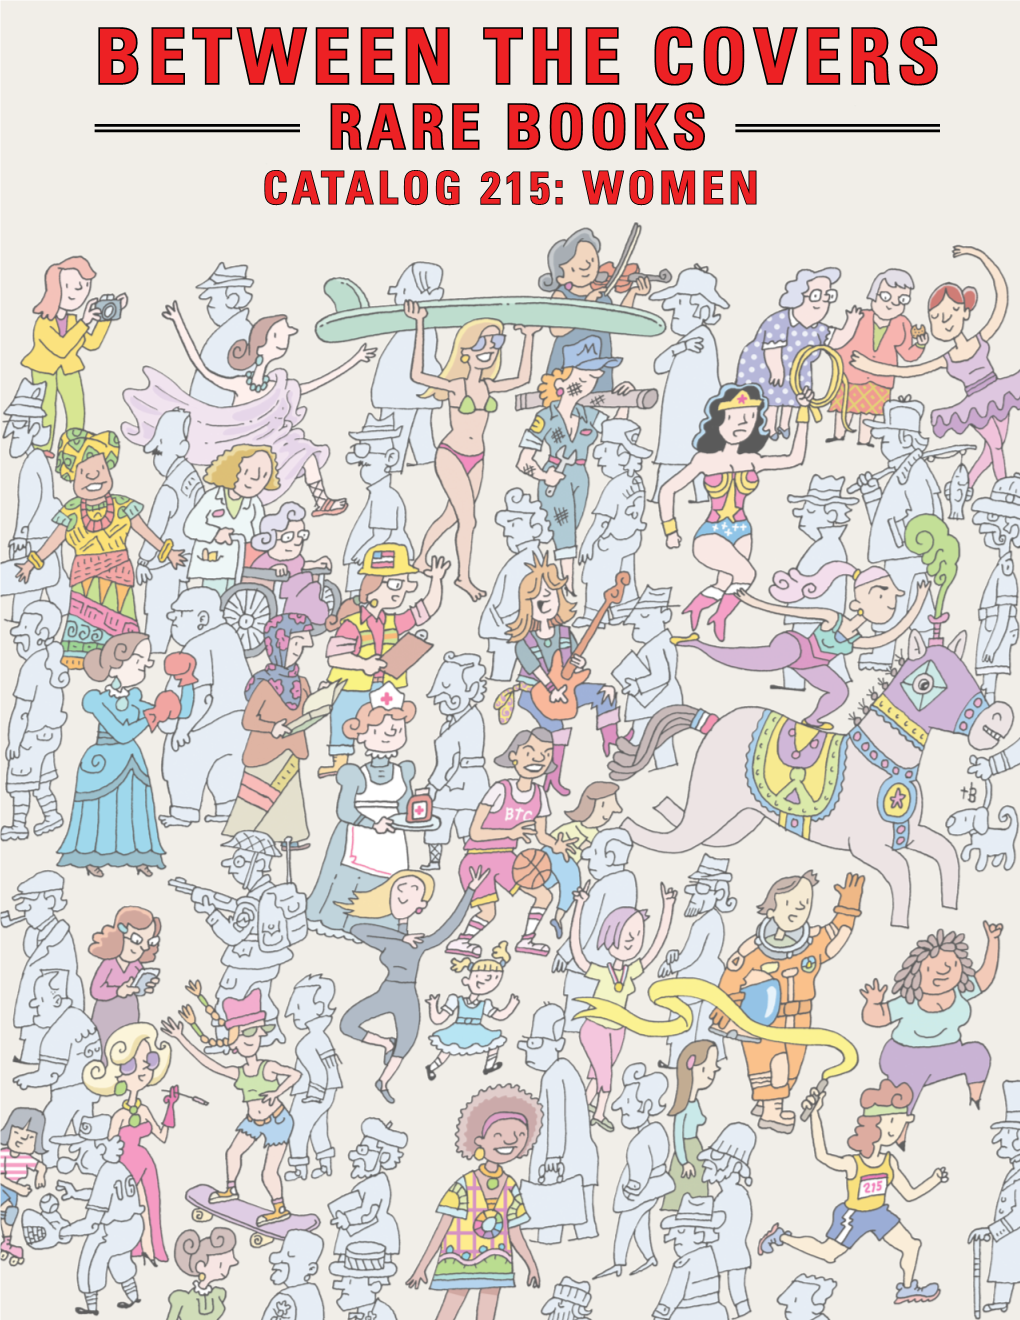 Catalog 215: Women Between the Covers Rare Books Catalog 215: Women